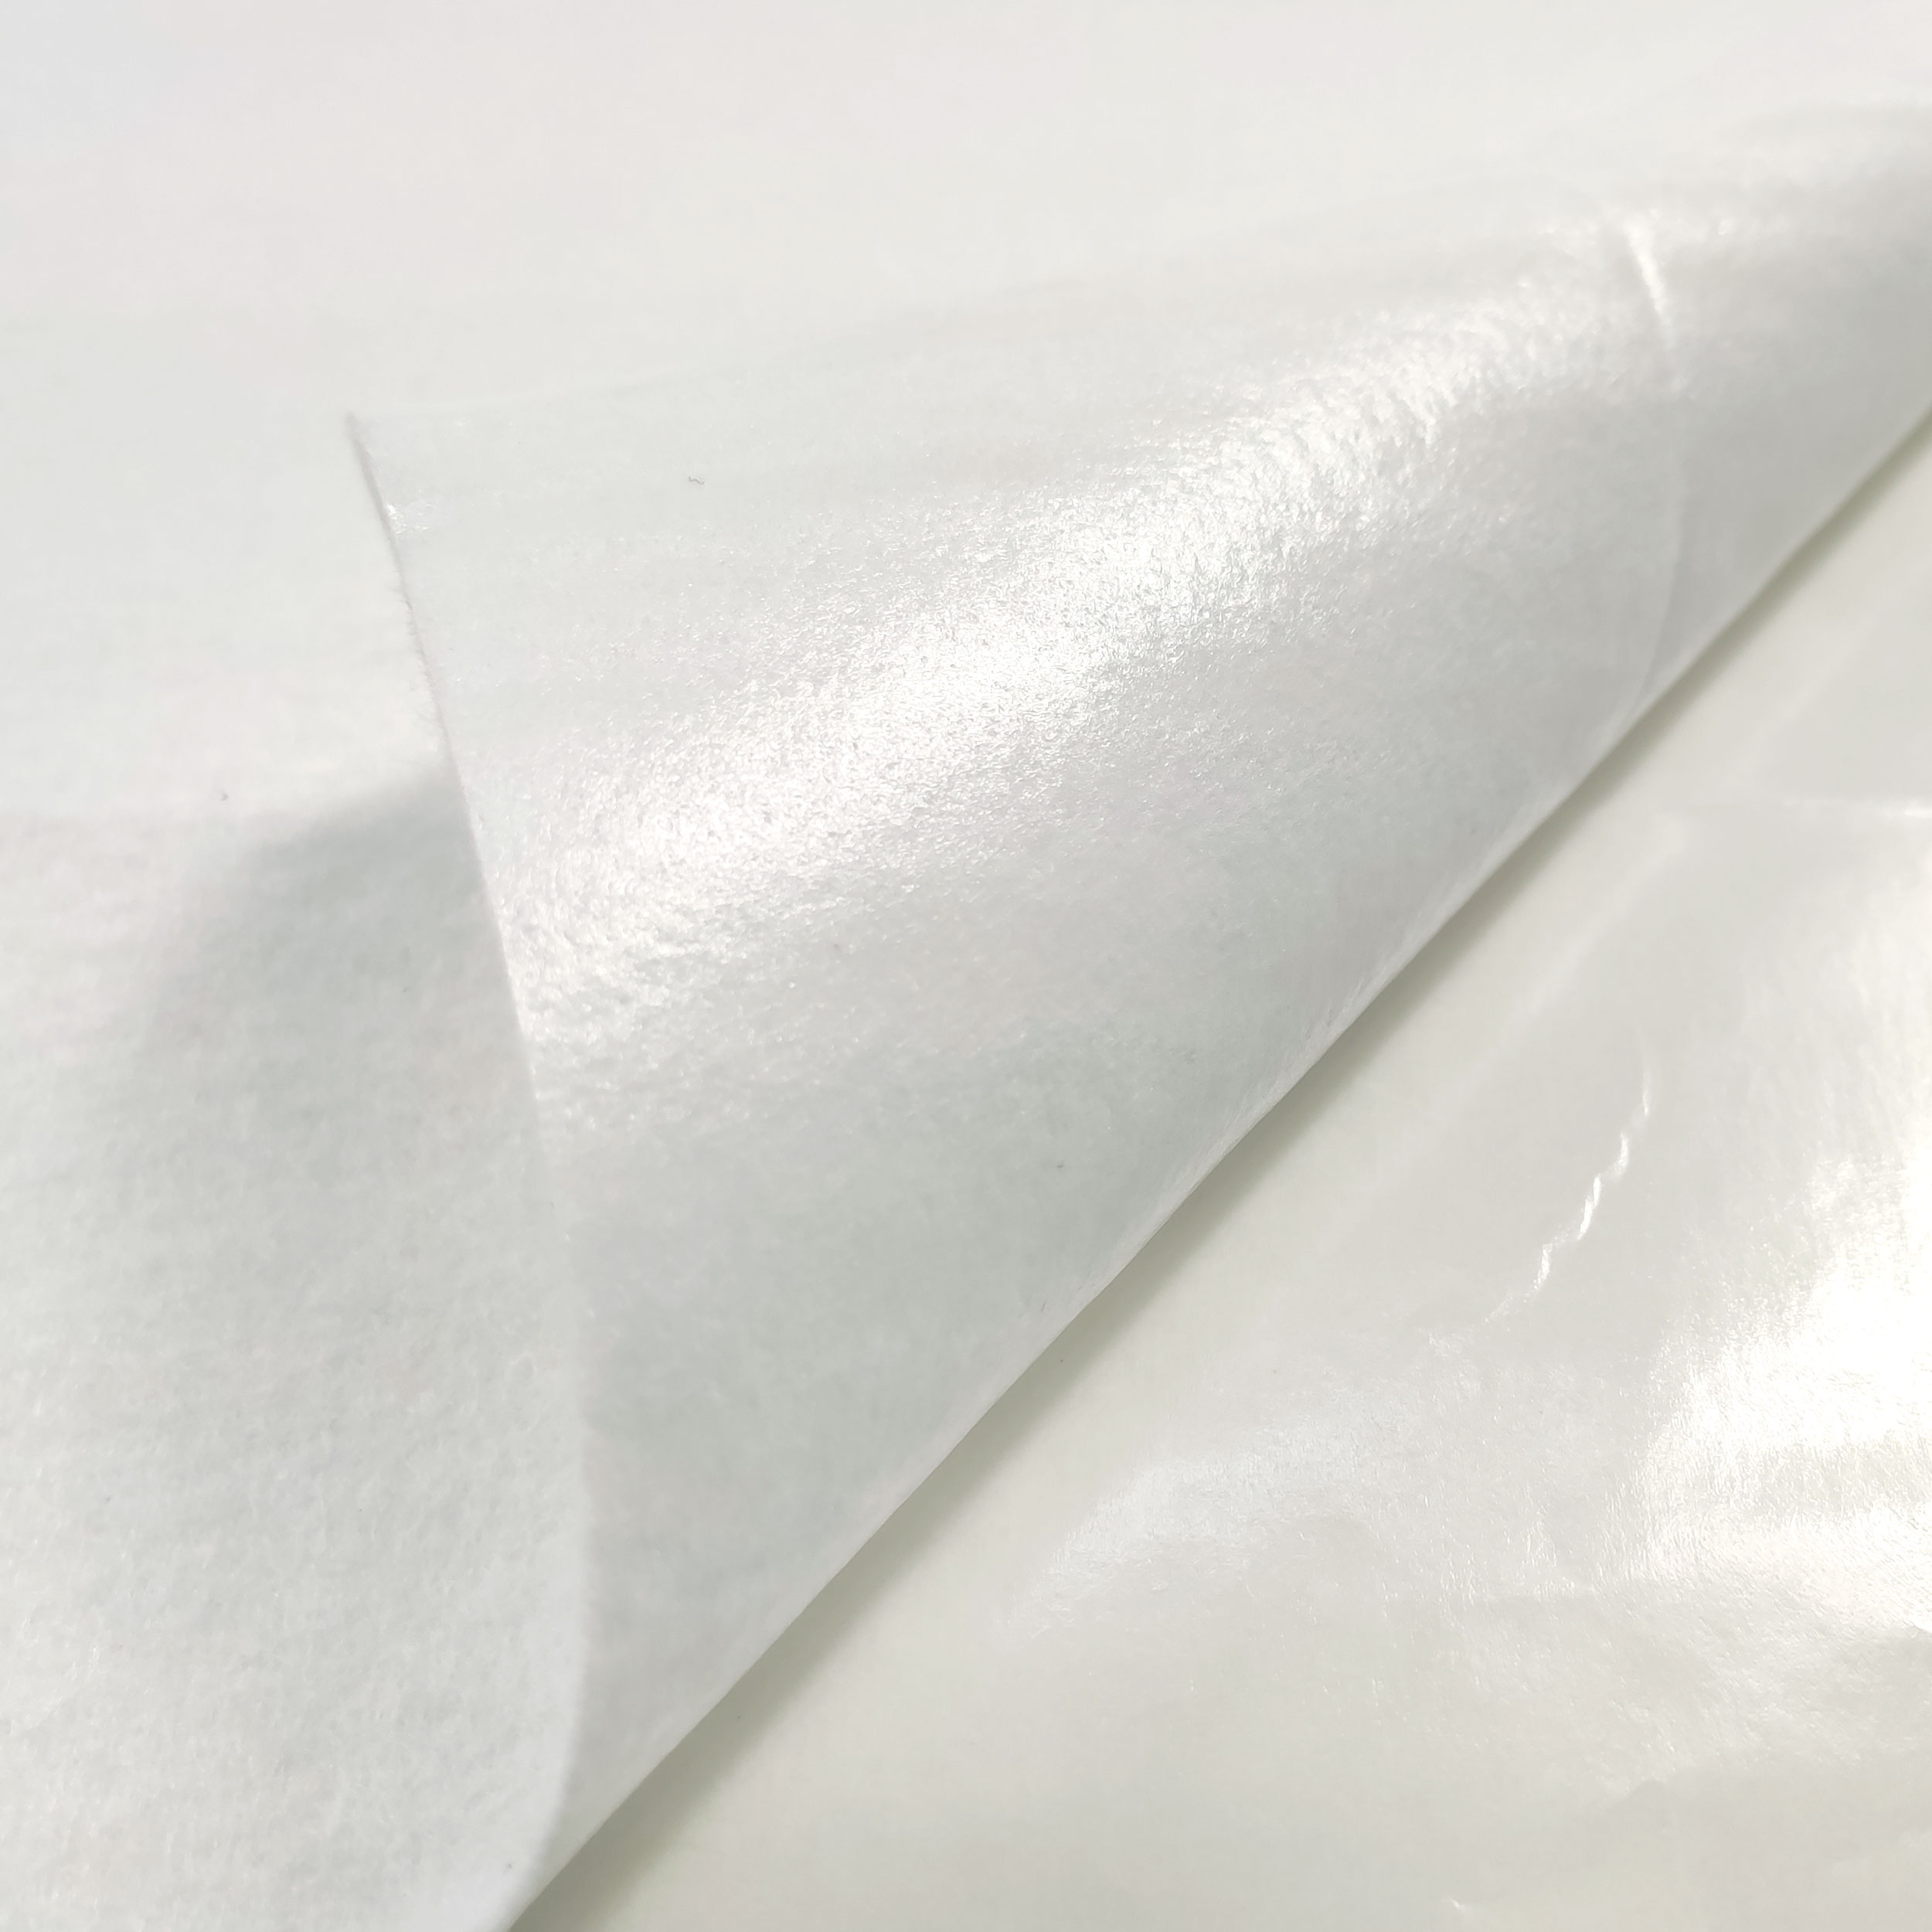 pannlenci adesivo per handmade bianco